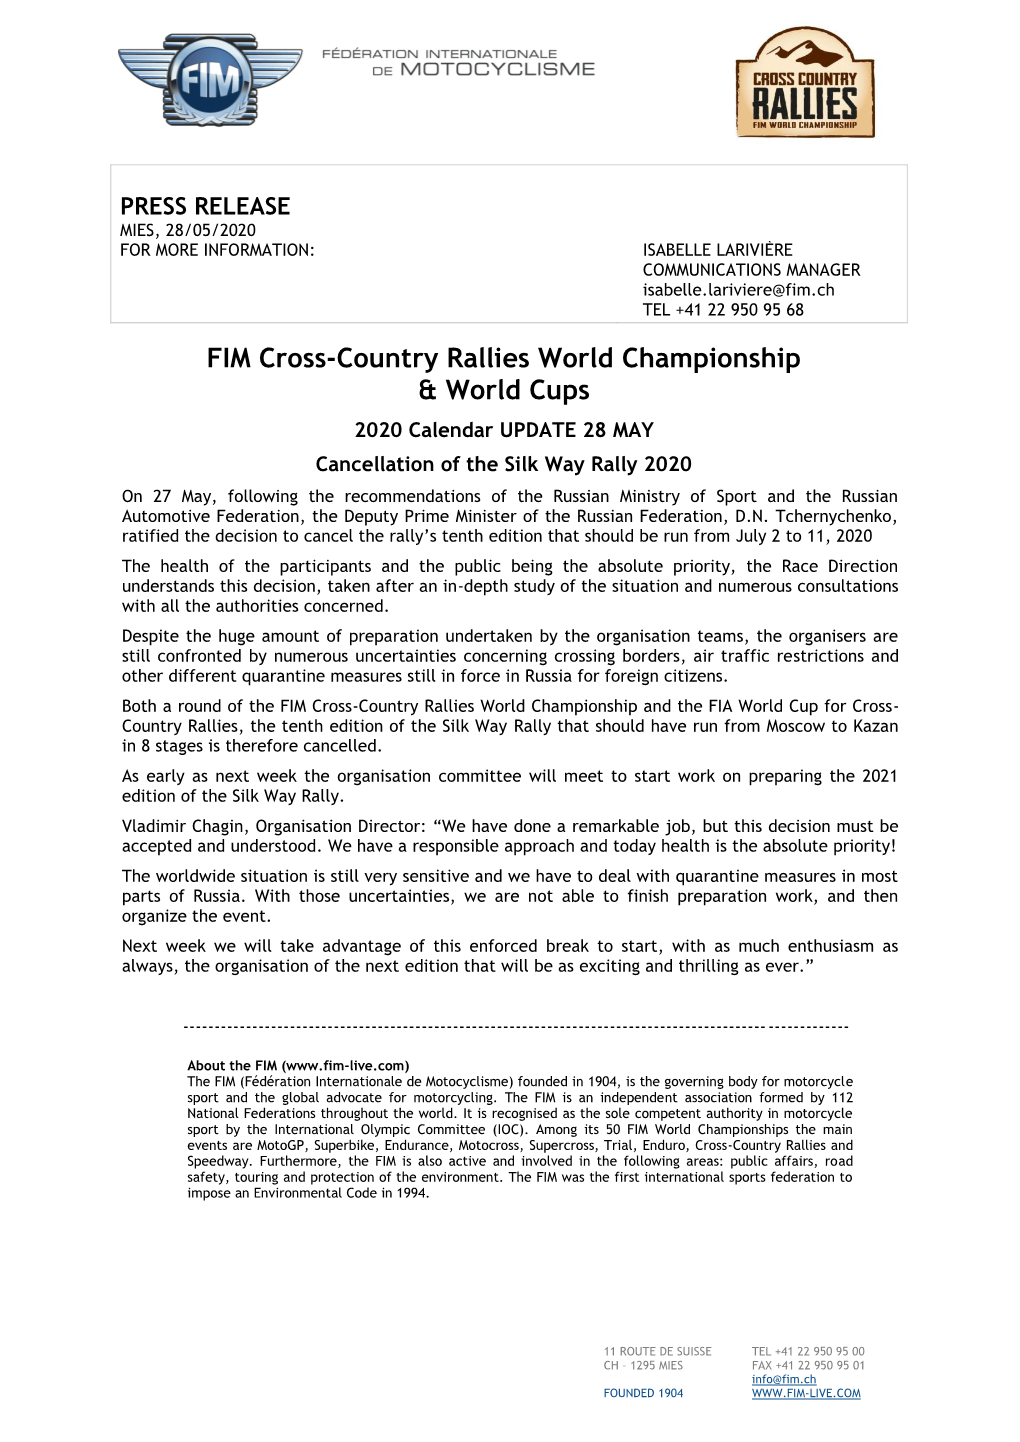 FIM Cross-Country Rallies World Championship & World Cups